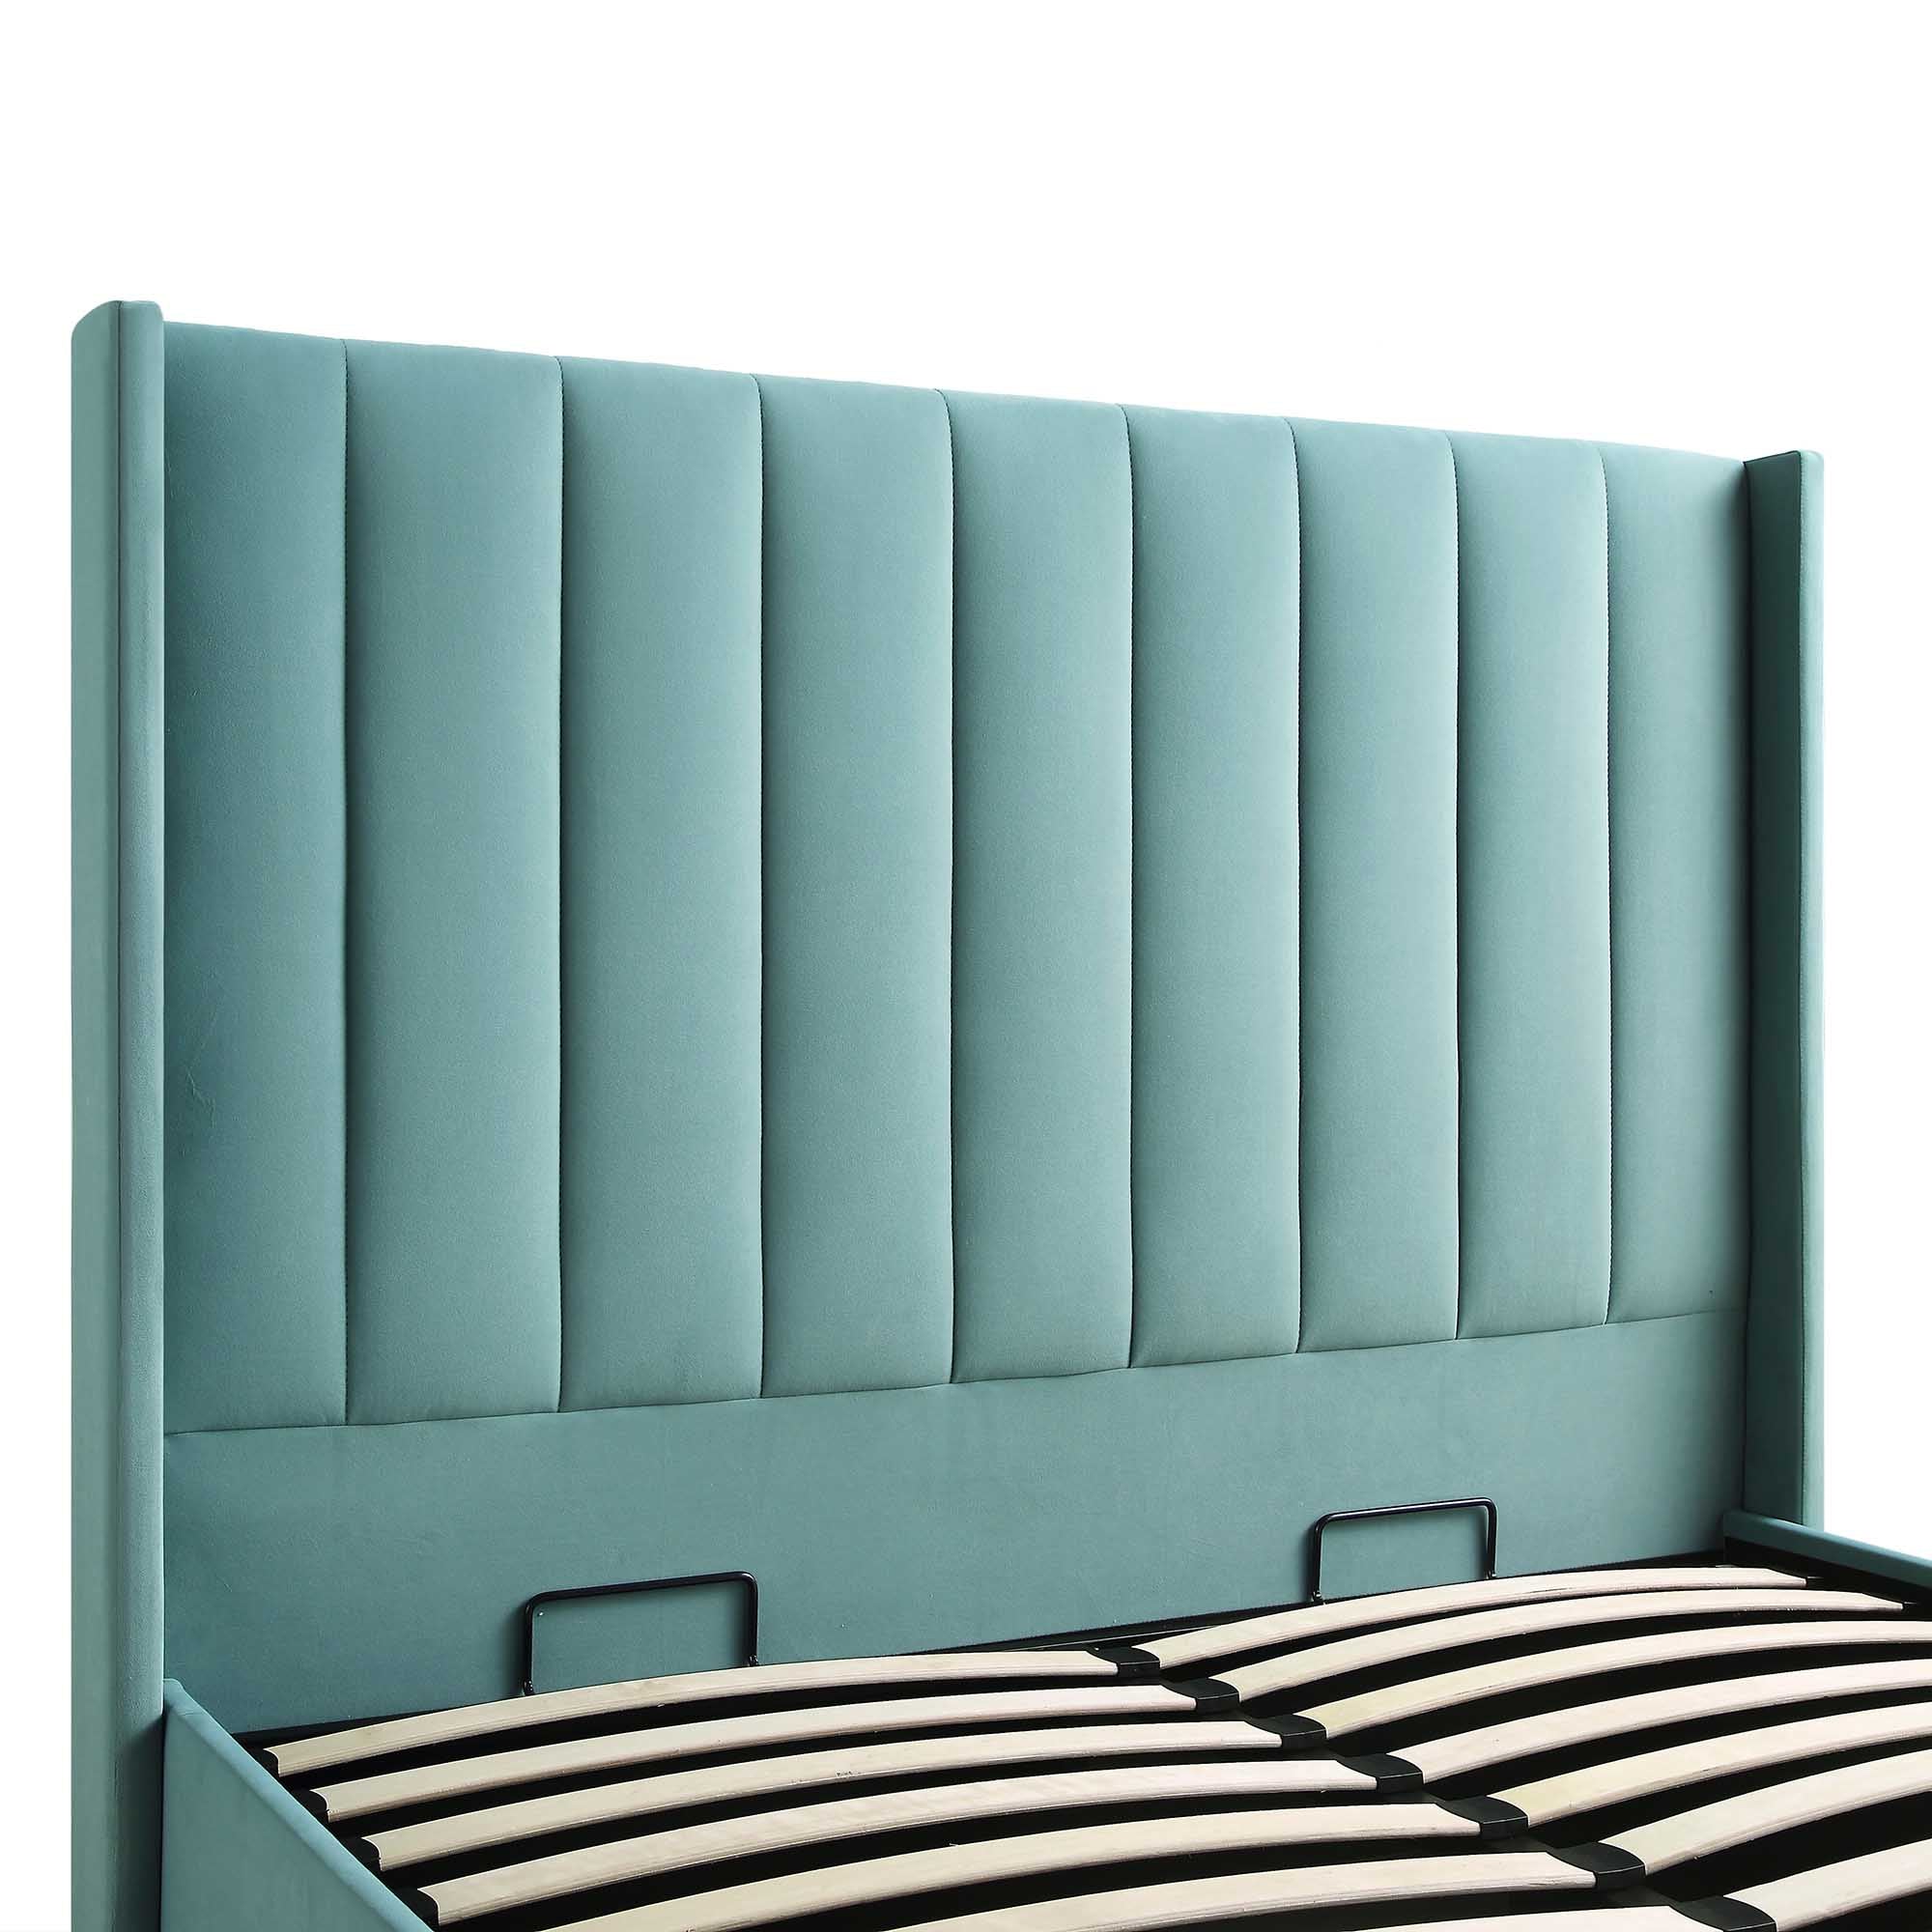 Wilton Seafoam Blue Velvet Ottoman Storage Bed